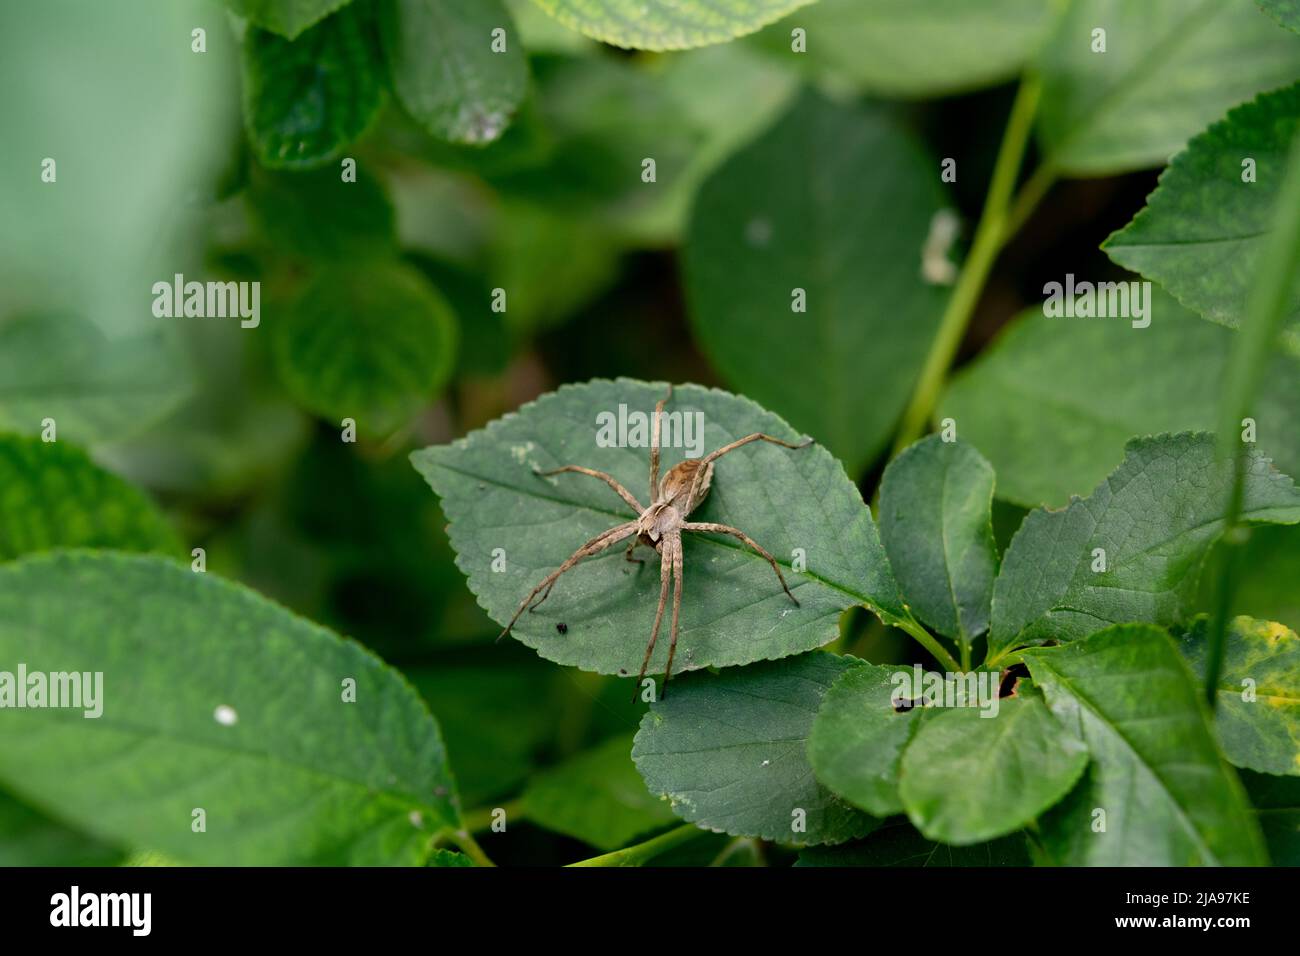 Nursery web (Pisaura mirabilis) on green leaf. Nursery Web Spider Sitting On Green Leaf In Garden. Insect macro photography. Stock Photo